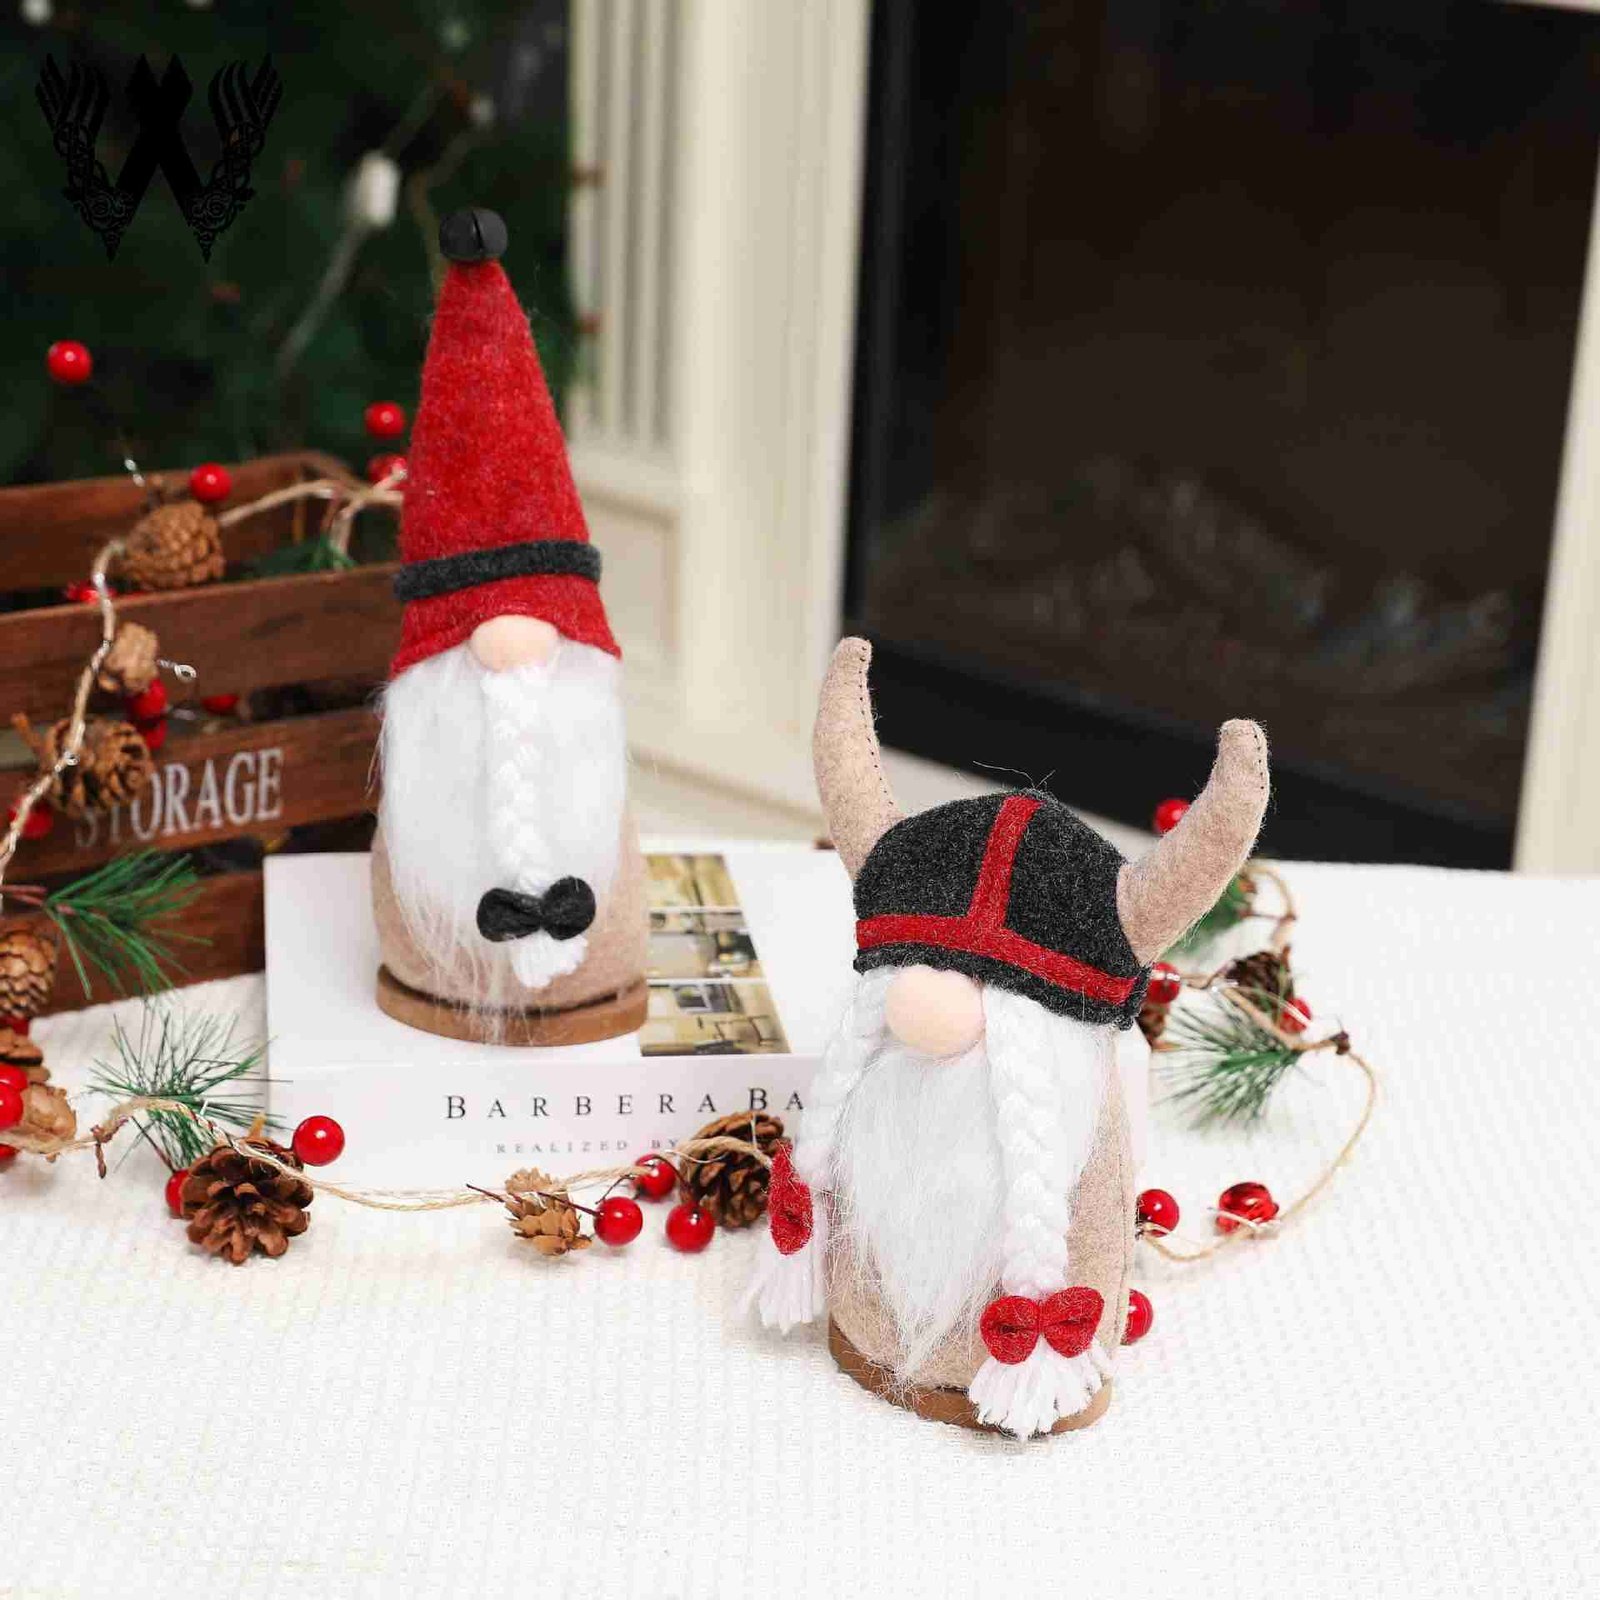 Christmas Rudolph Viking Dwarf Decoration Gift